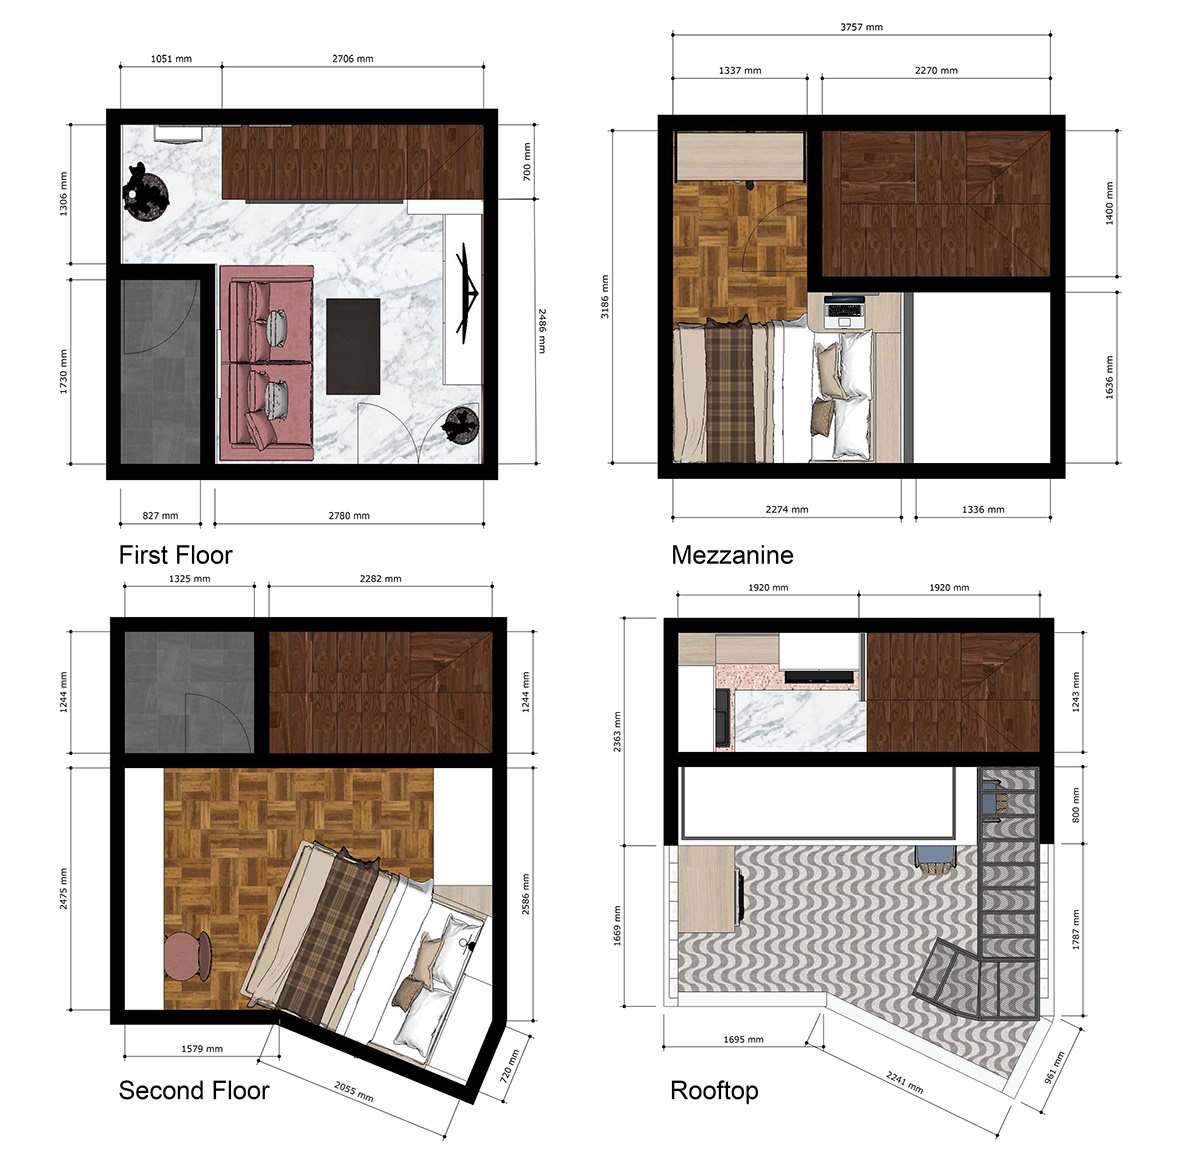 apartmentdesign housedesign interior design  moderninteriordesign